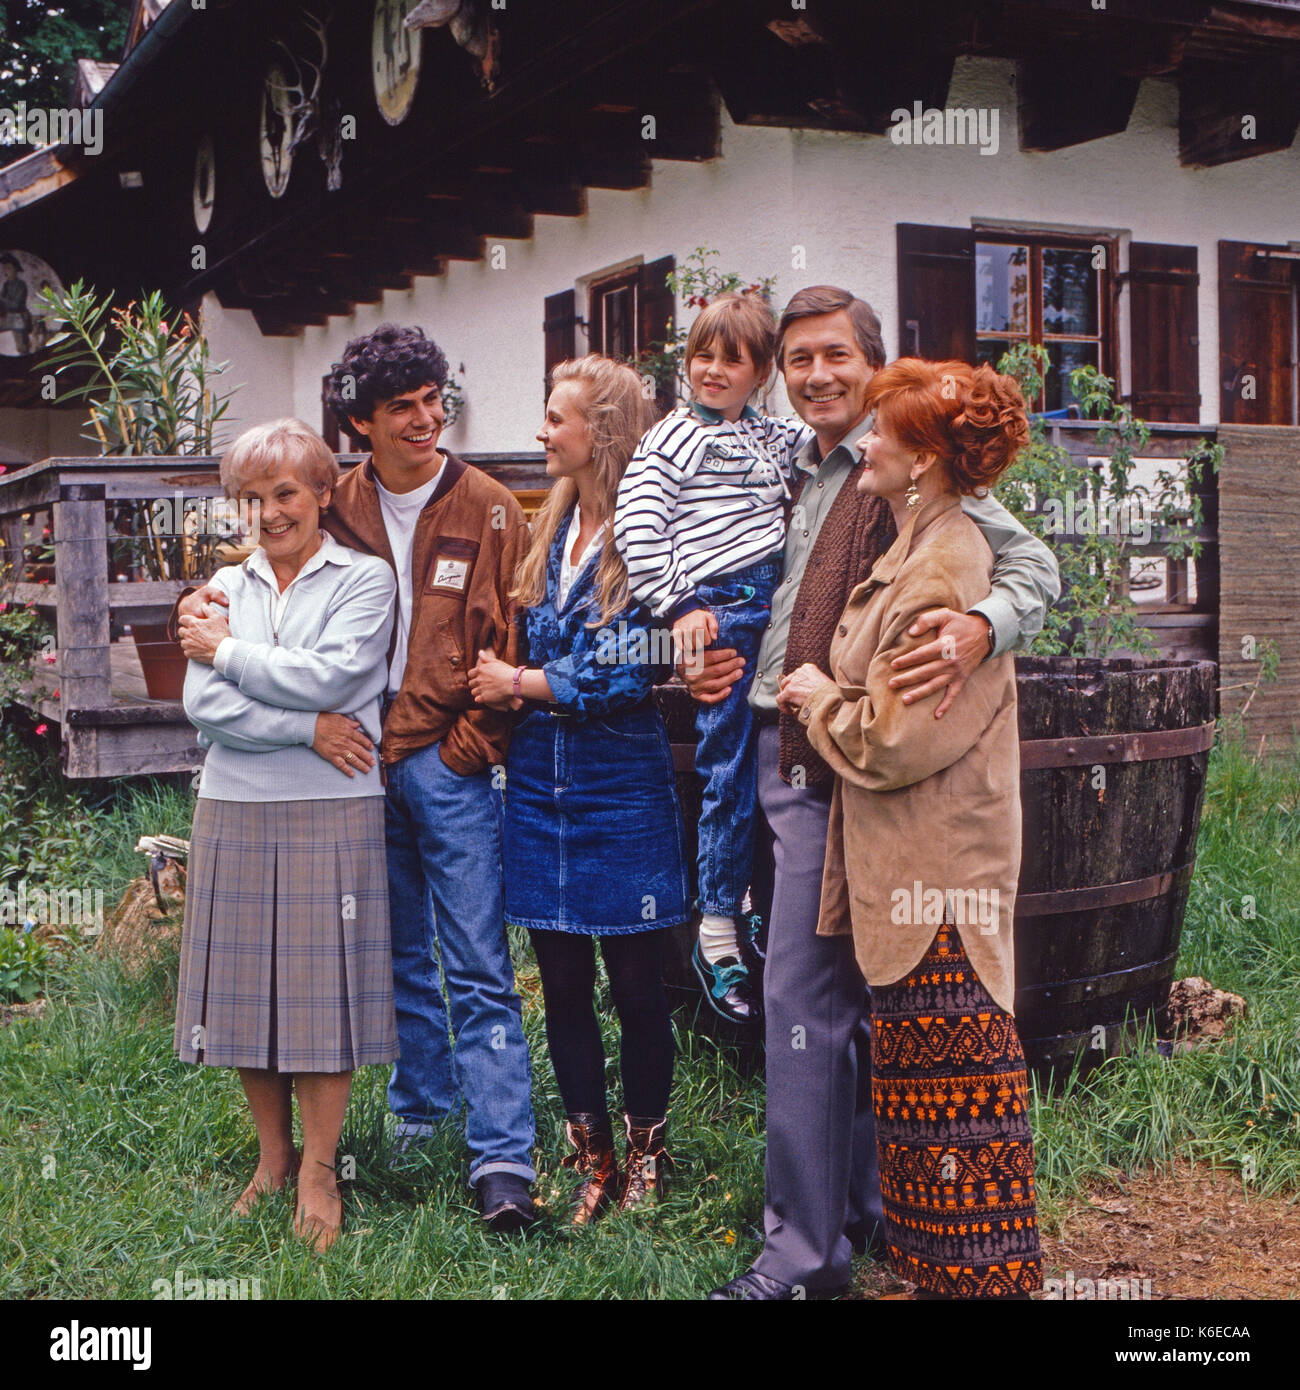 Forsthaus Falkenau, Fernsehserie, Deutschland 1989 - 2013, Darsteller: Bruni Löbel, Michael Wolf, Katharina Köhntopp, Nicole Schmidt, Christian Wolff, Gisela Uhlen Stock Photo